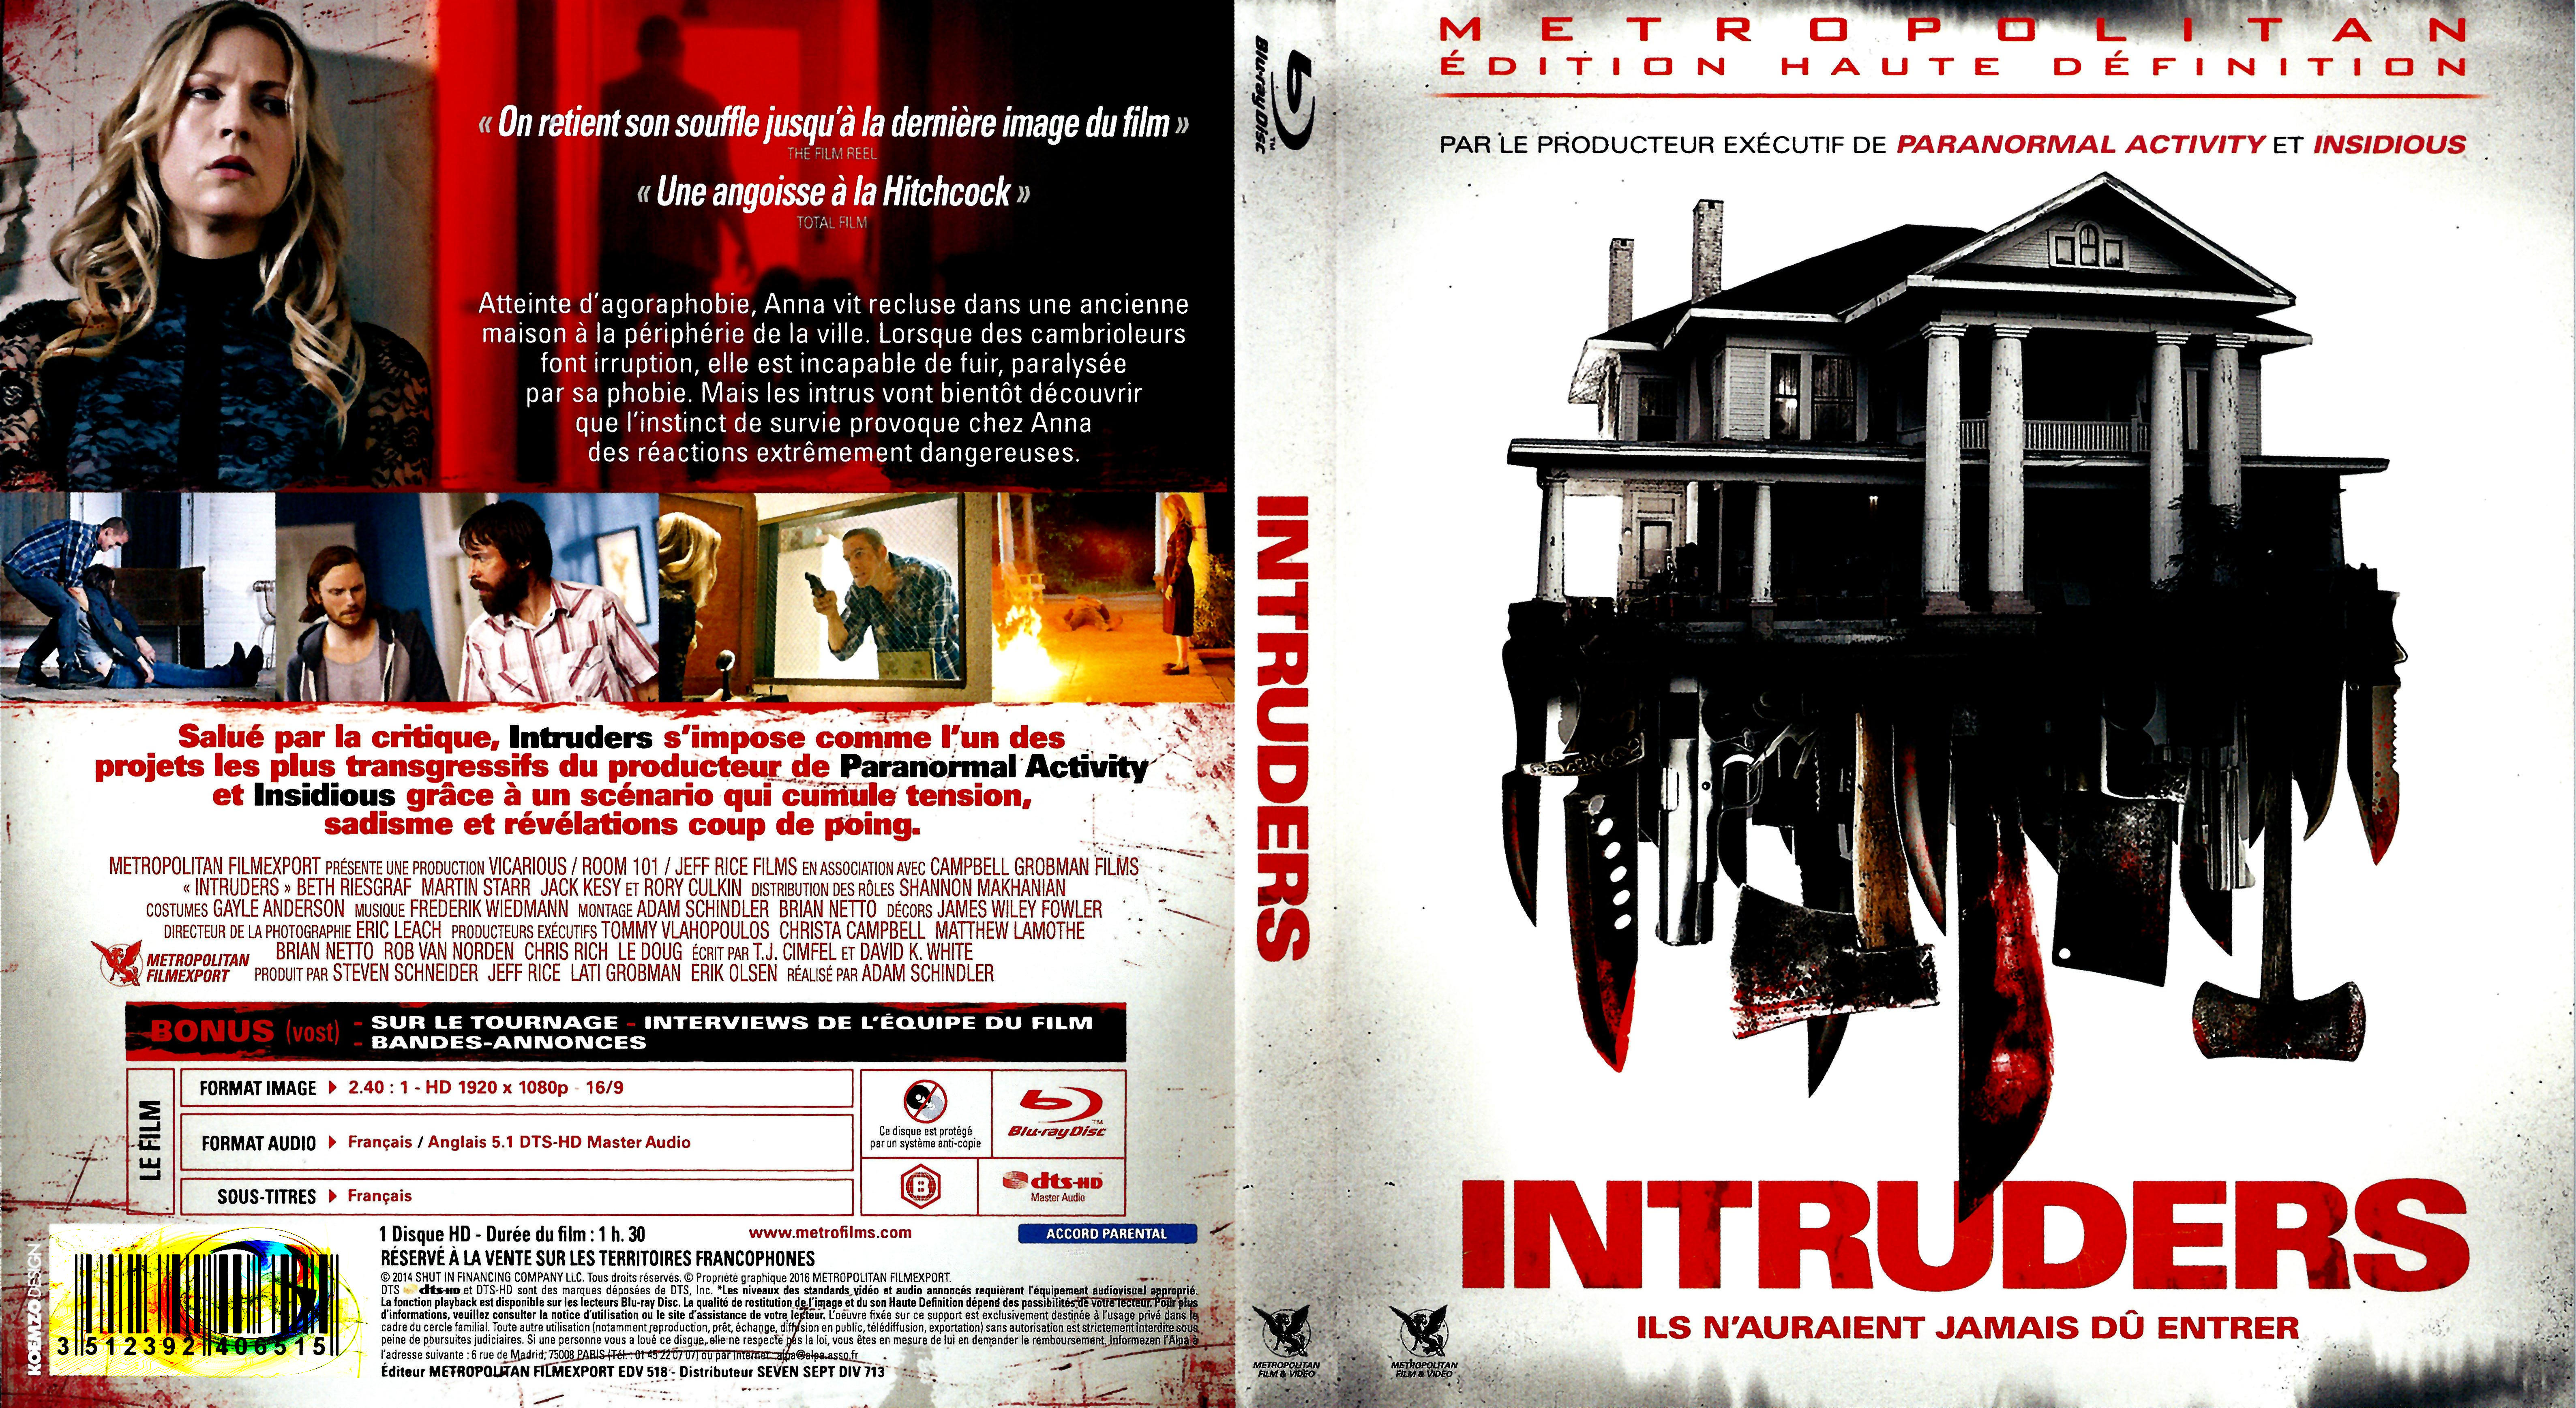 Jaquette DVD Intruders (2015) (BLU-RAY)